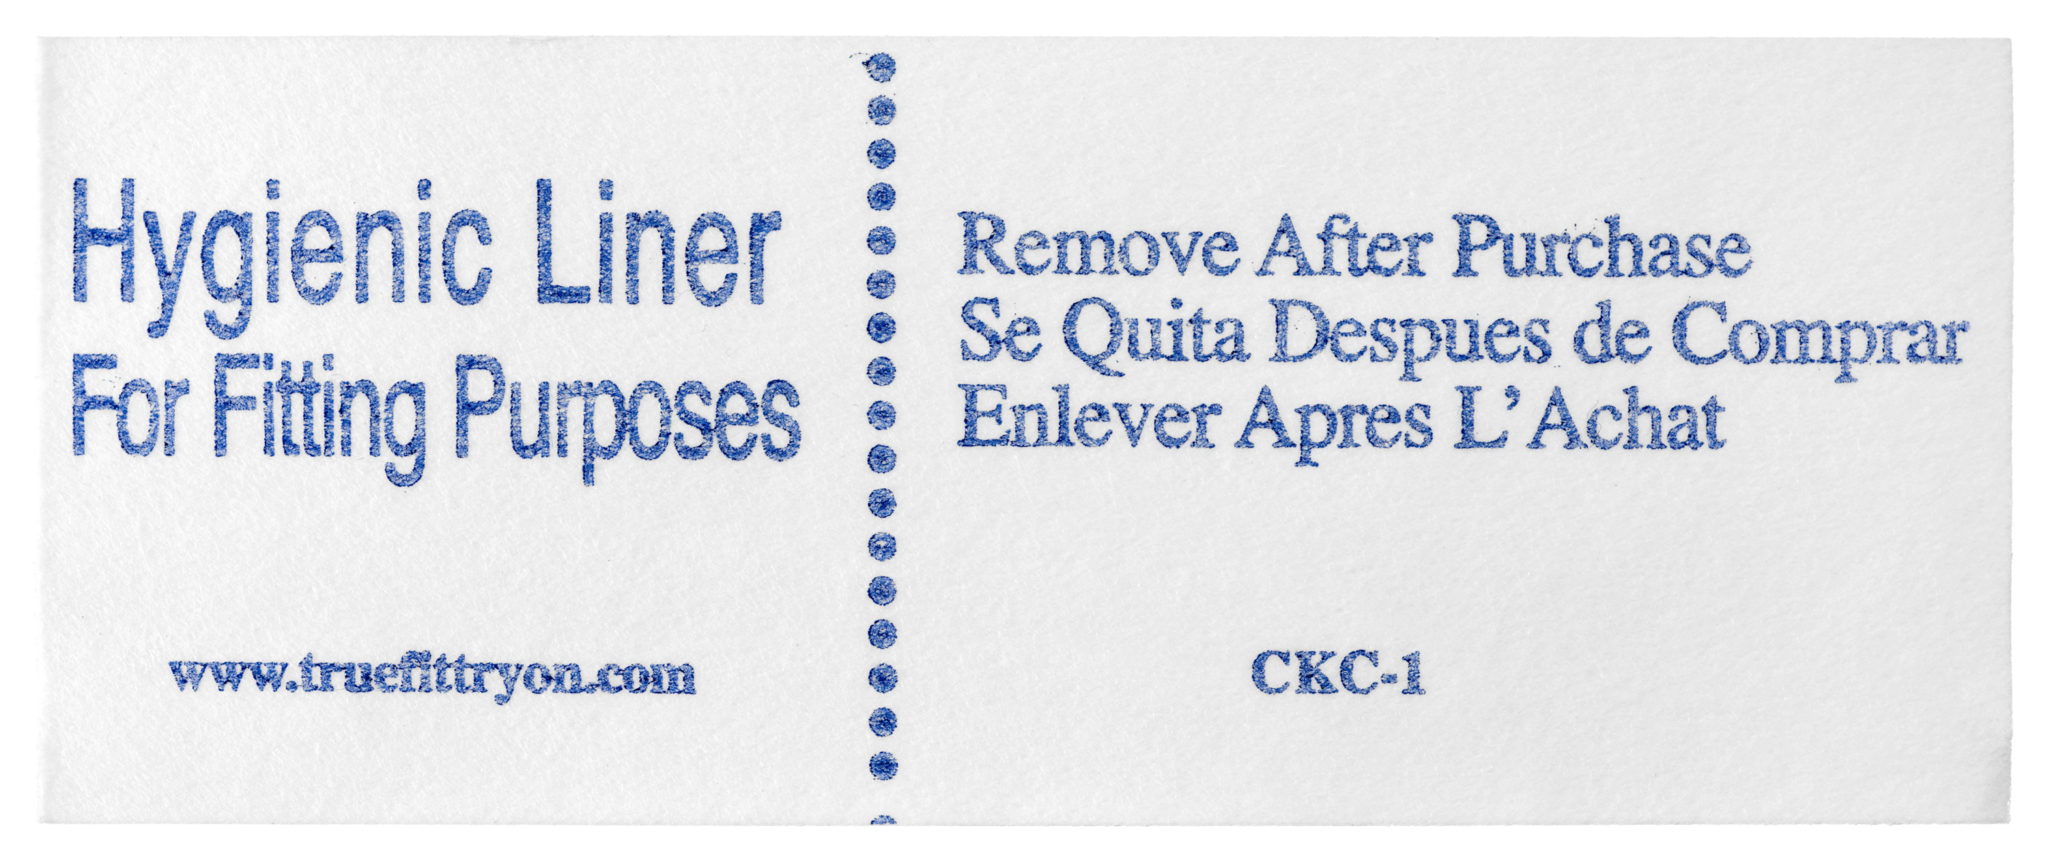 CKC-1 Hygienic Liner